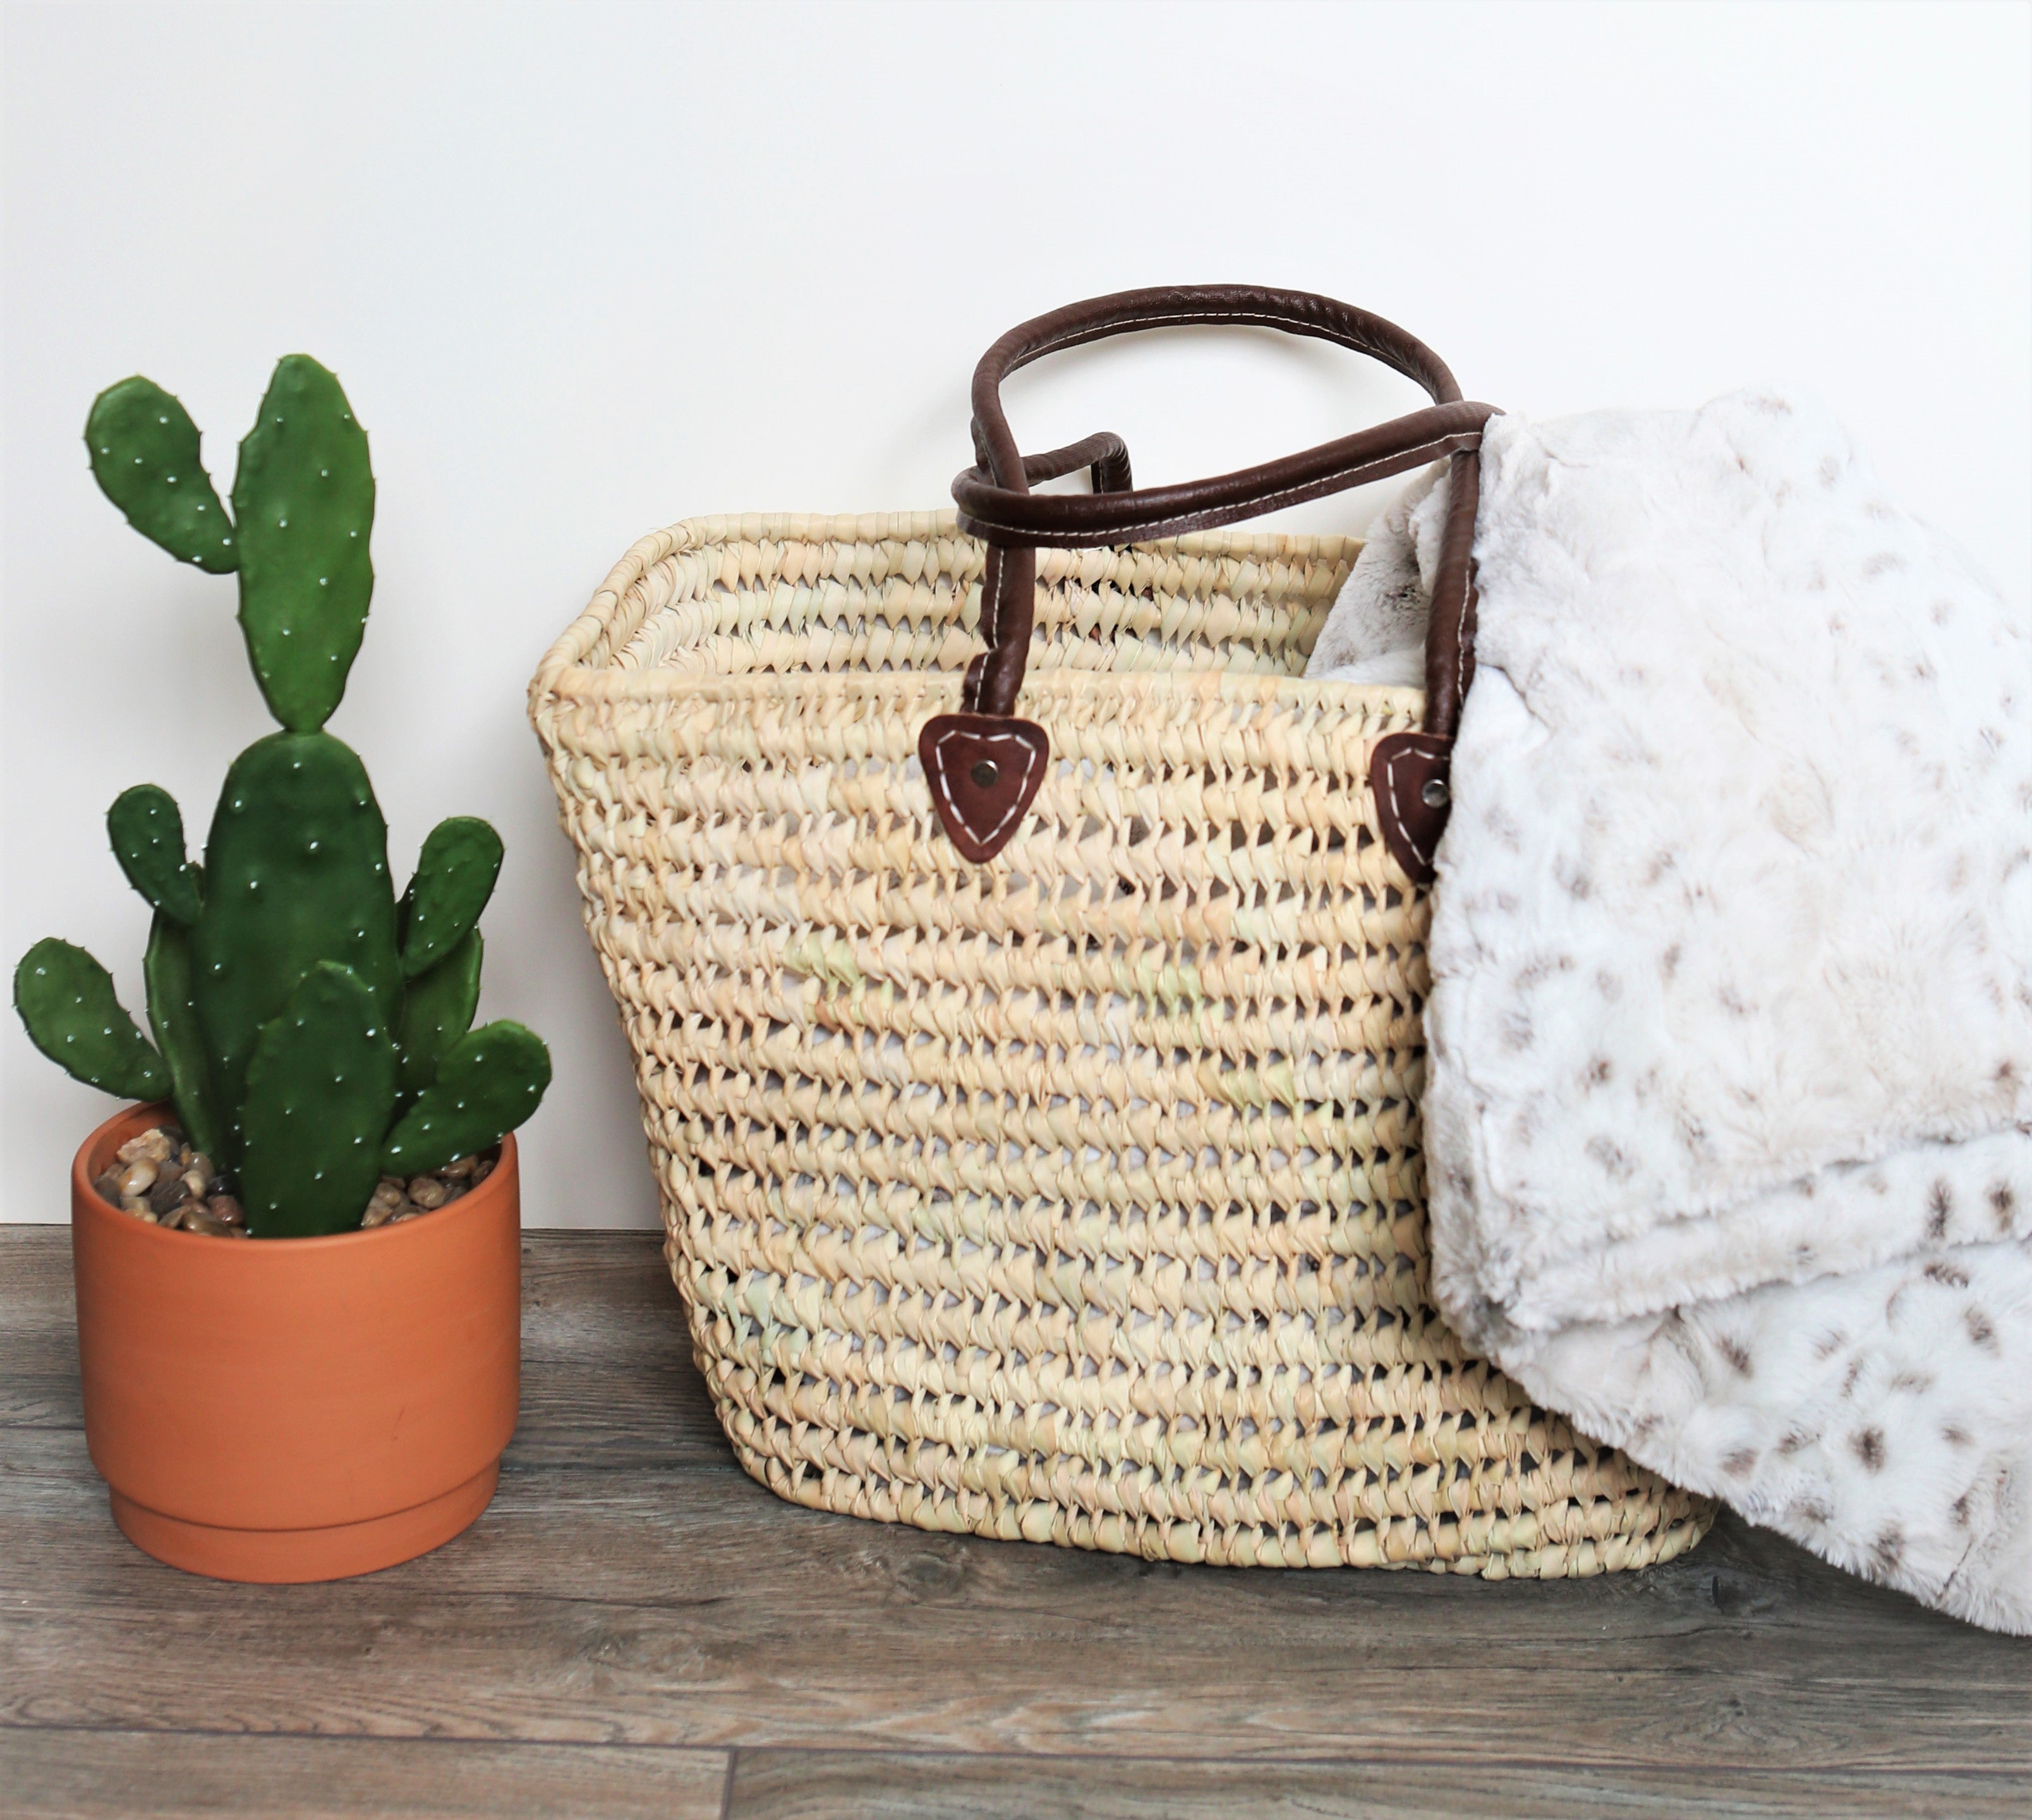 Round Straw Bag Medium Wicker Basket Natural Handles : French 